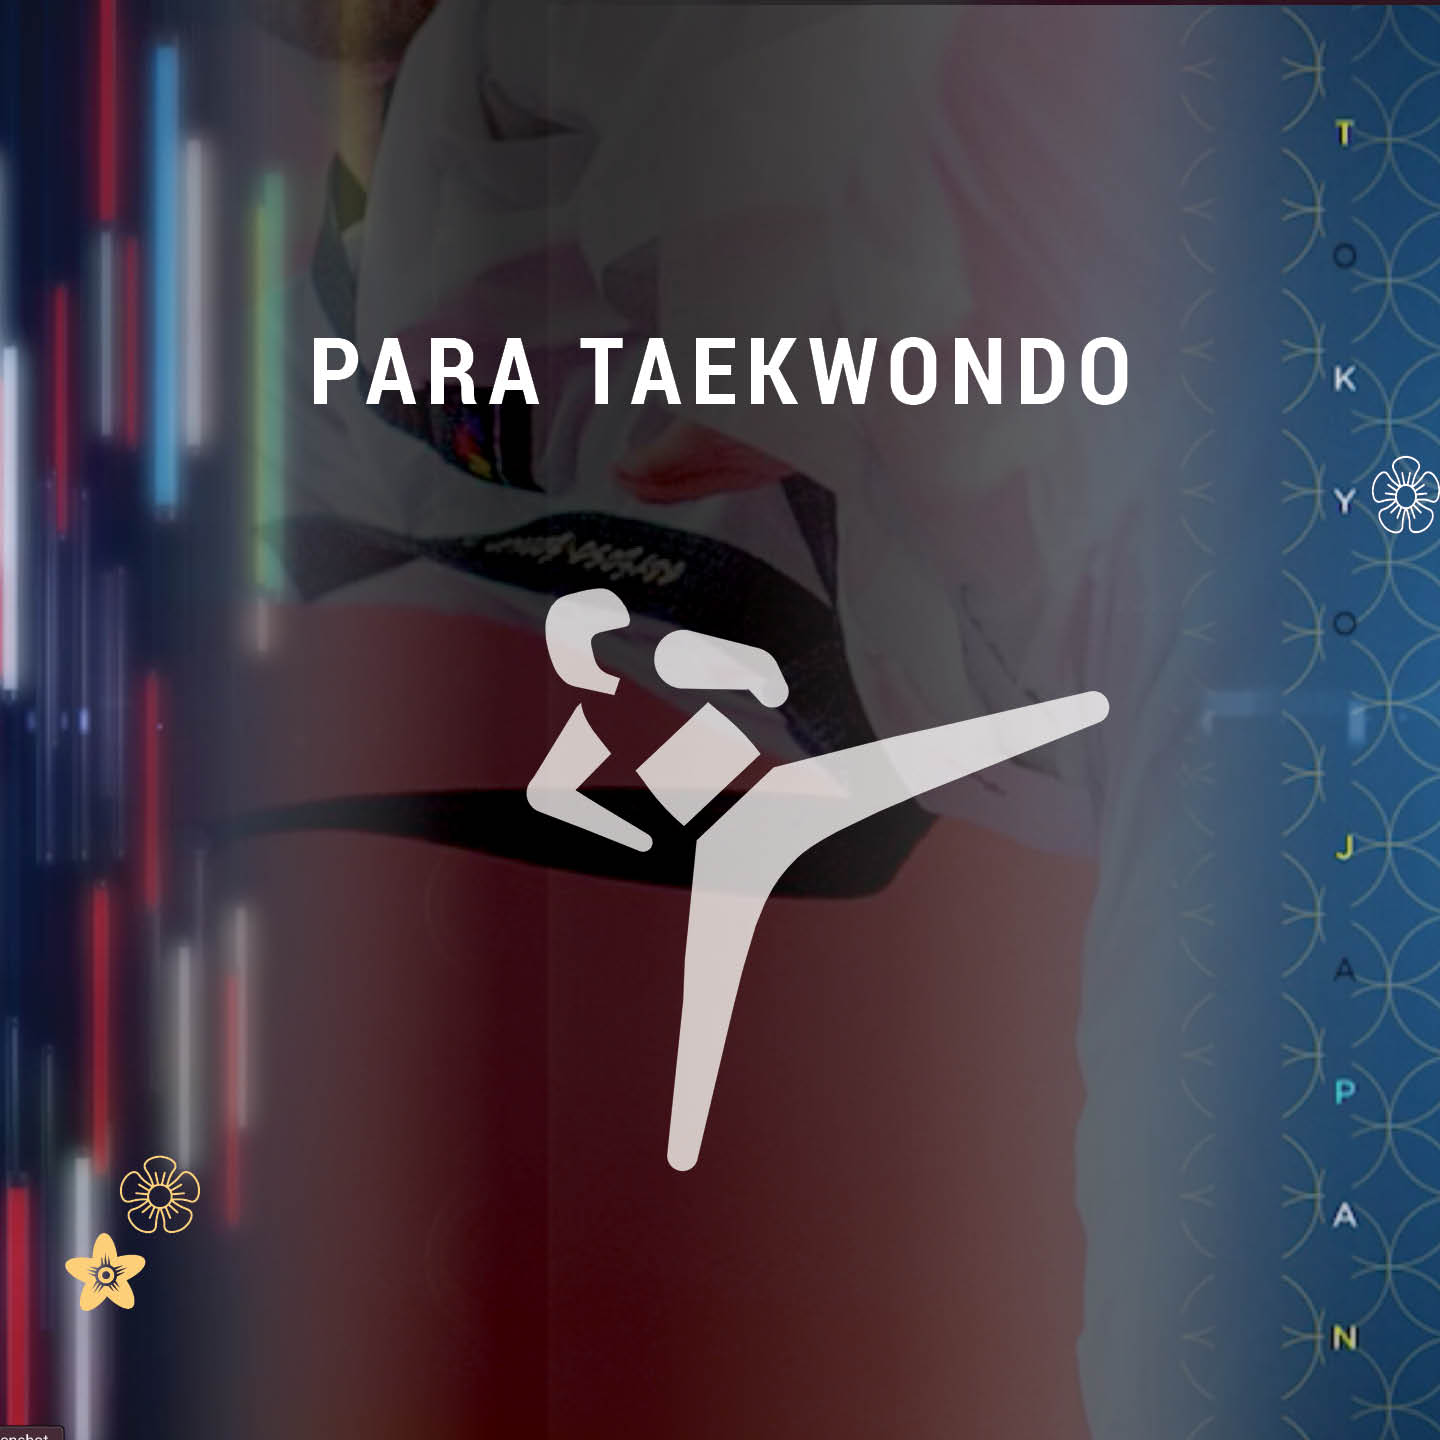 Para taekwondo video on demand